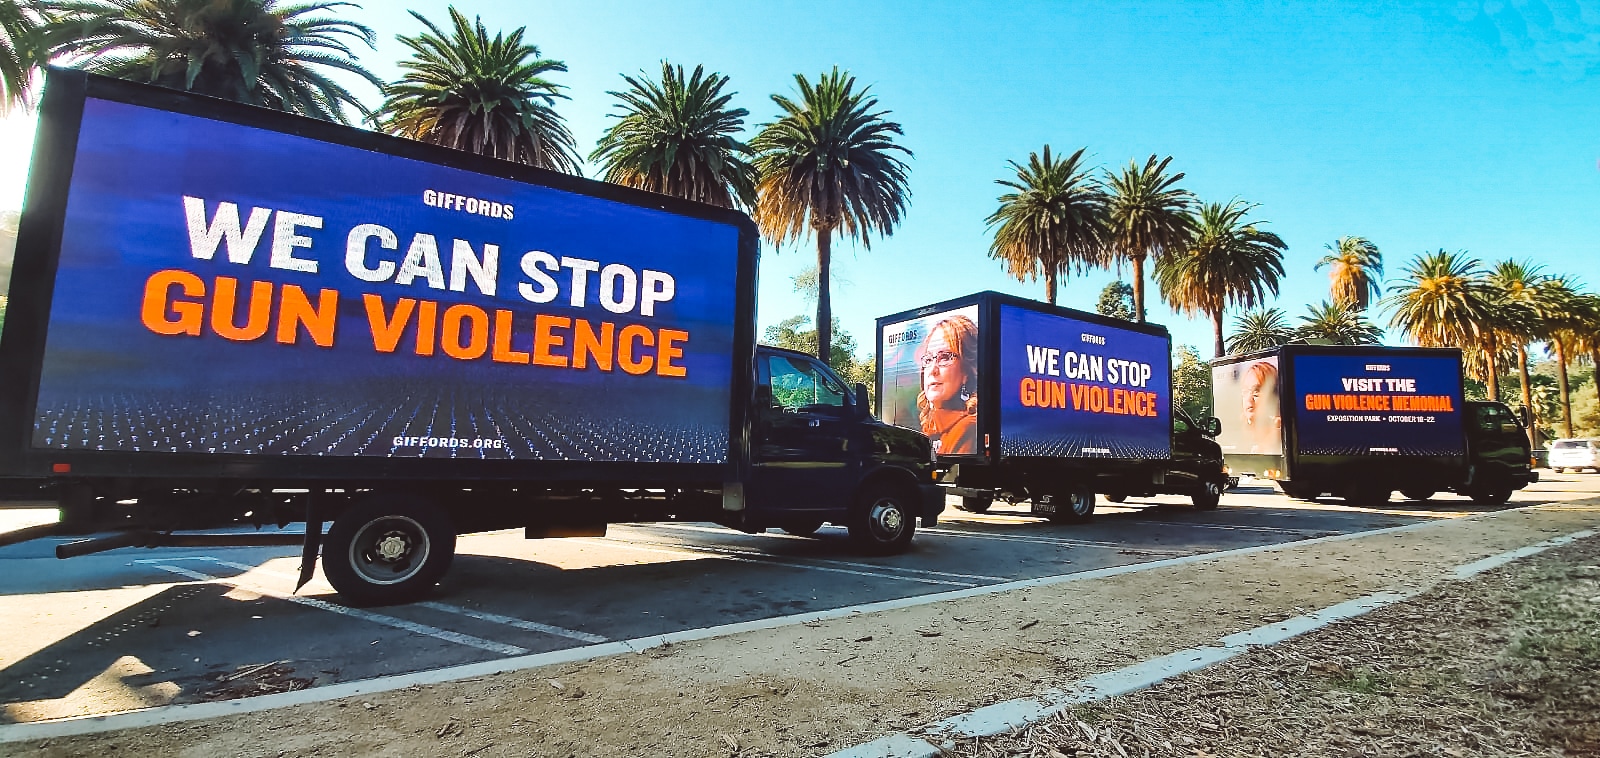 Los Angeles mobile billboards - led truck advertising